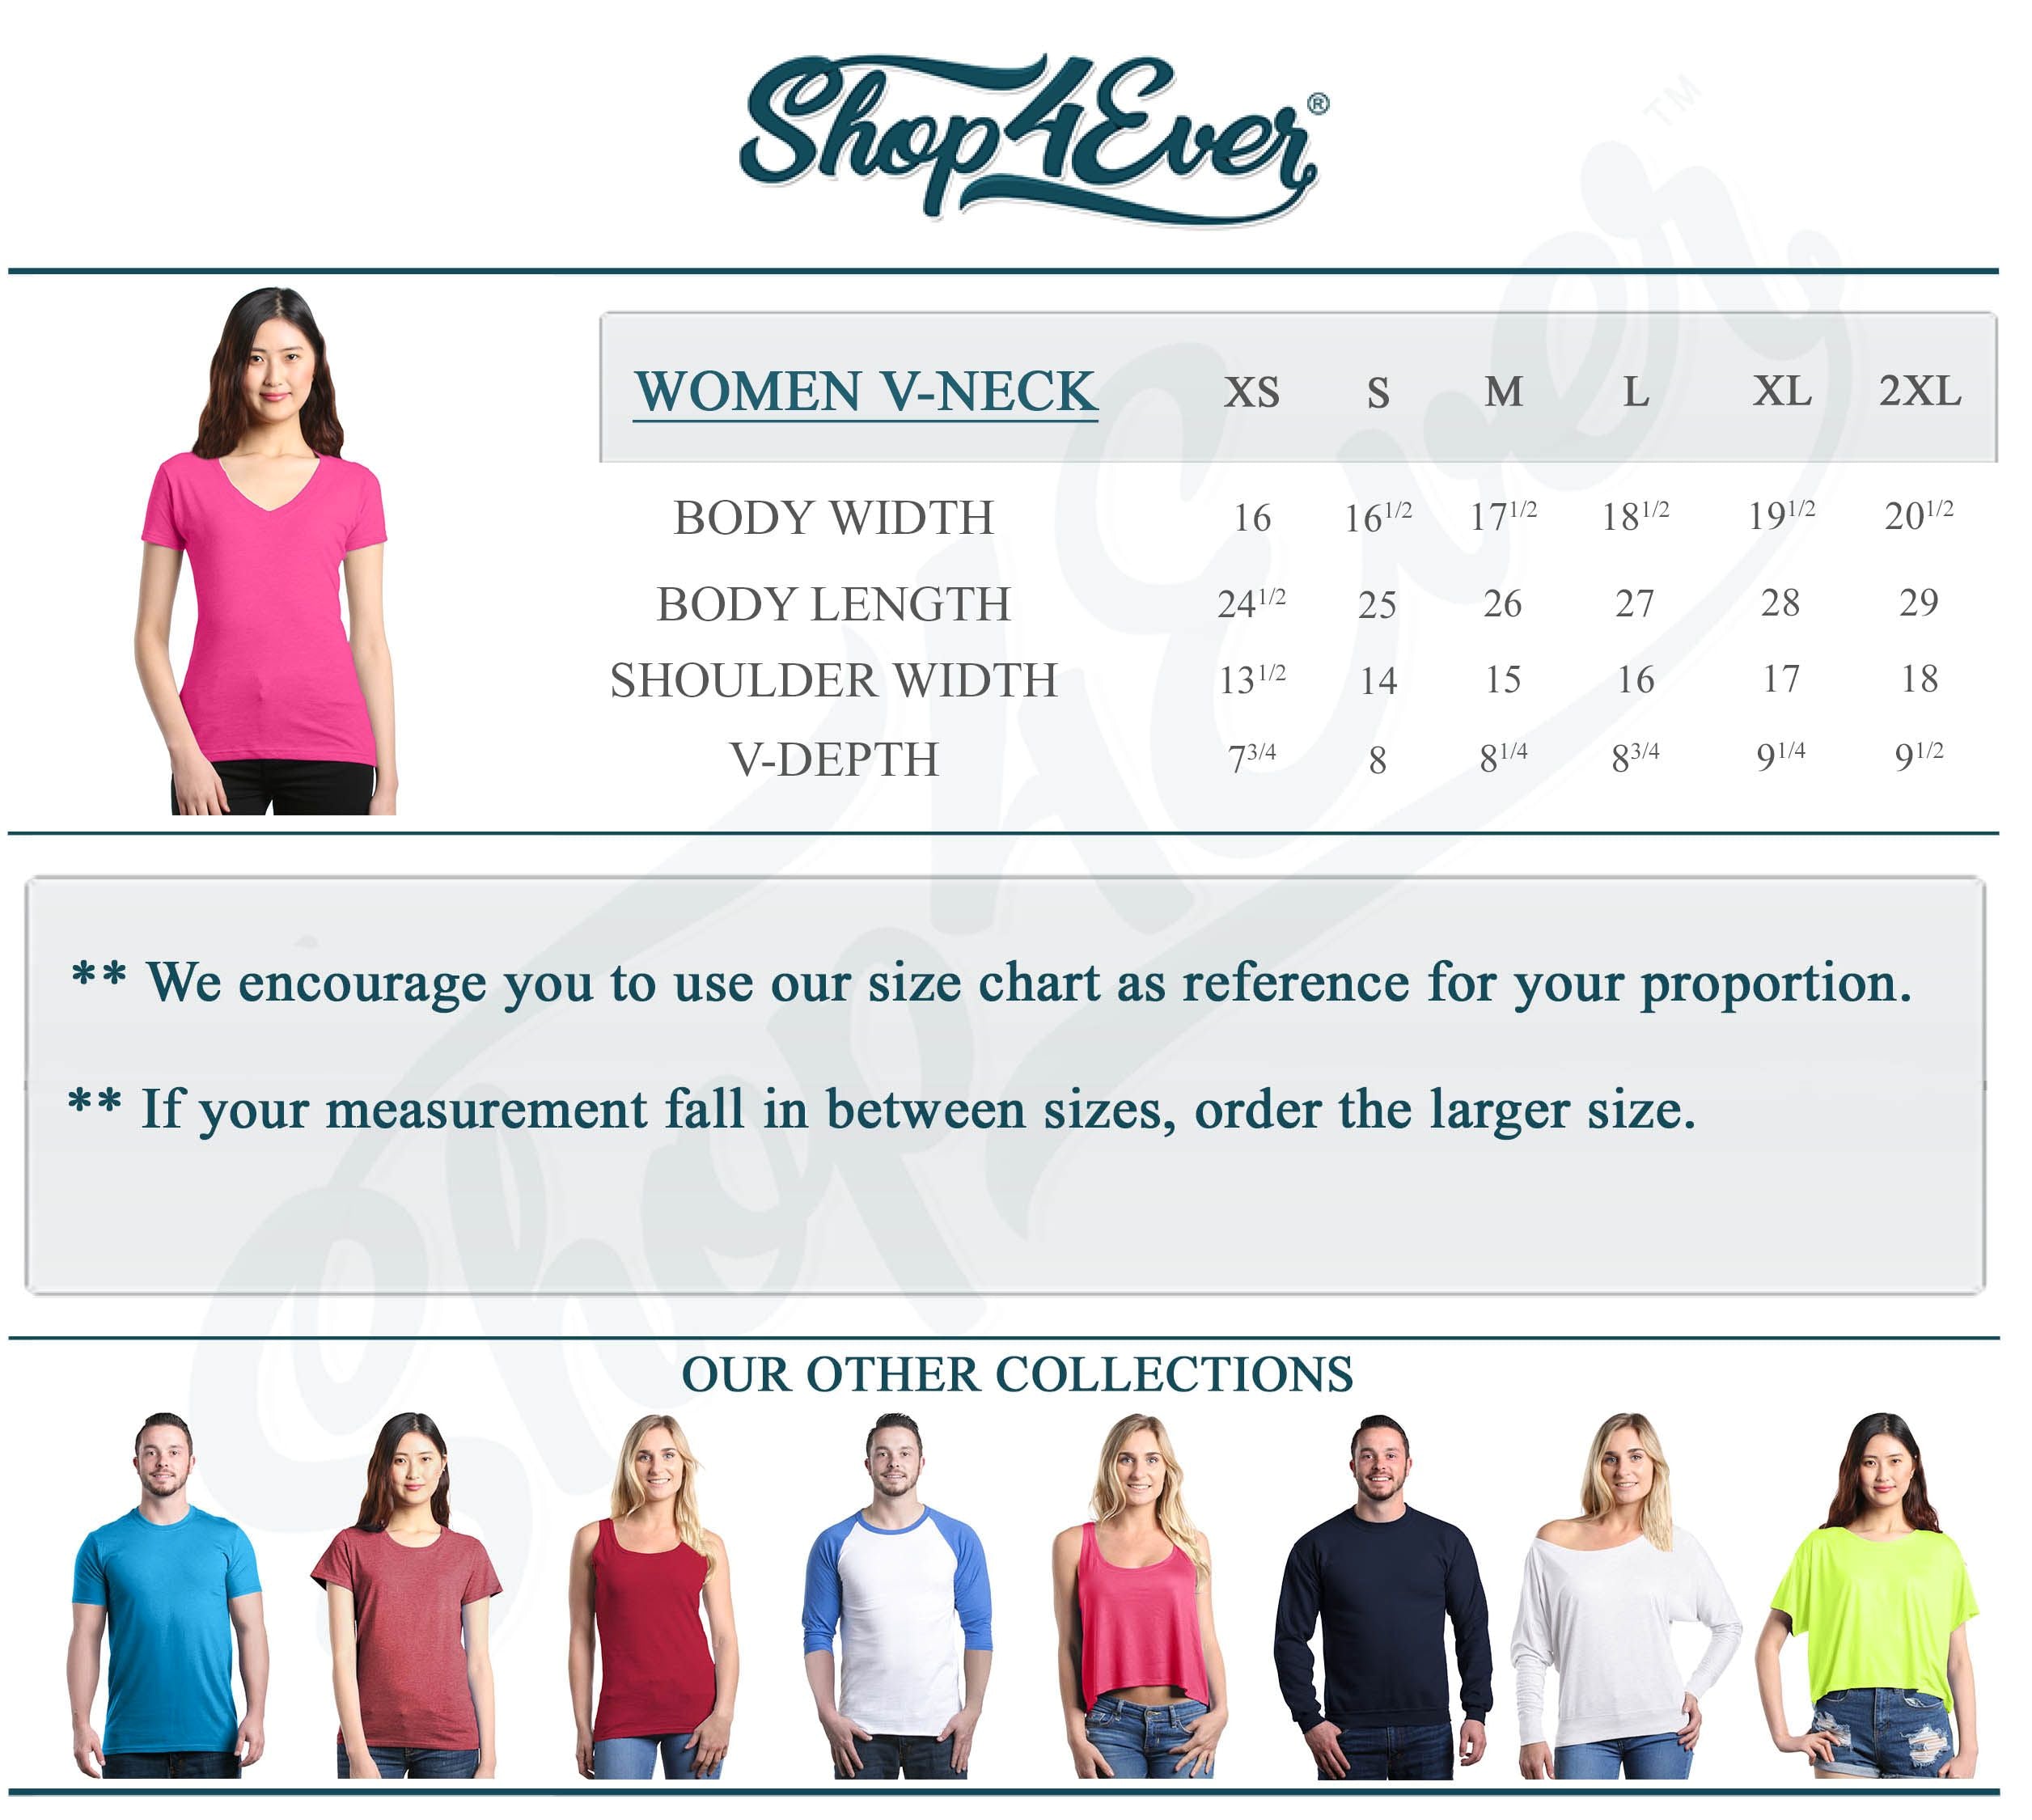 Childhood Cancer Awareness Gold Rainbow Women's V-Neck T-Shirt Slim Fit